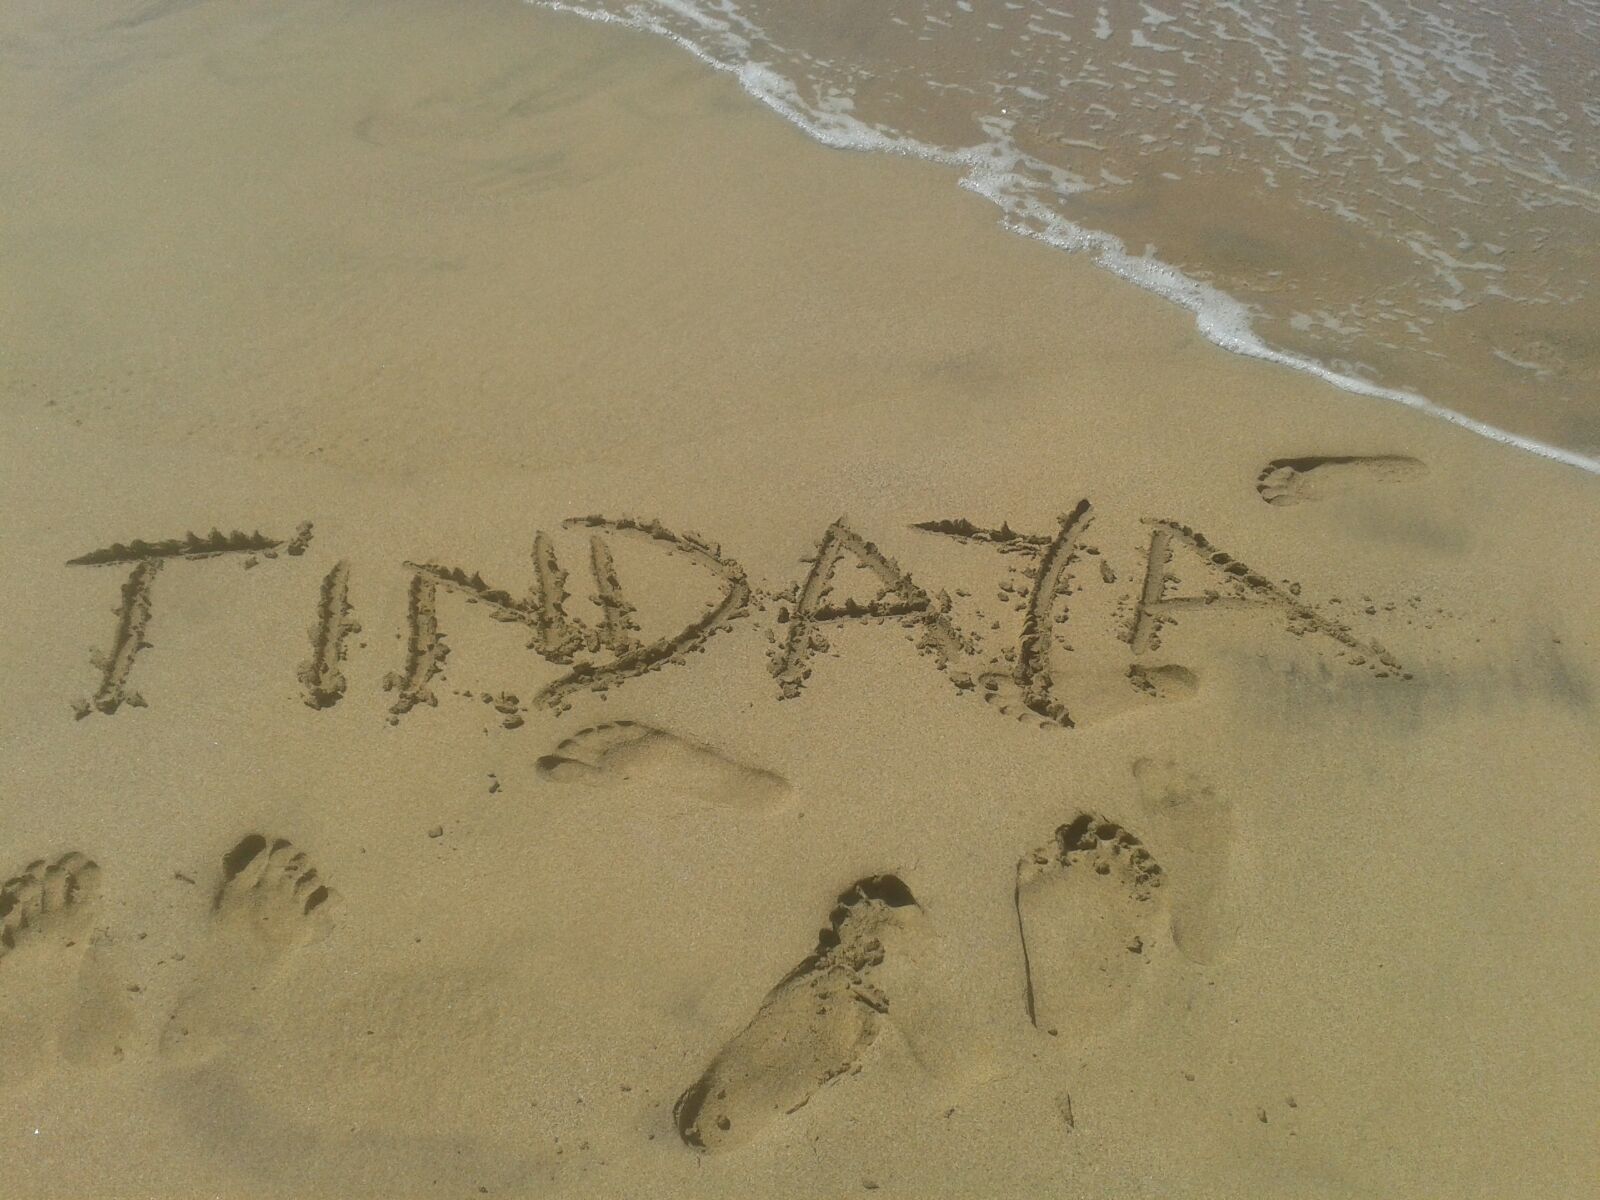 TINDAYA BEACH#FUERTEVENTURA#SPAIN